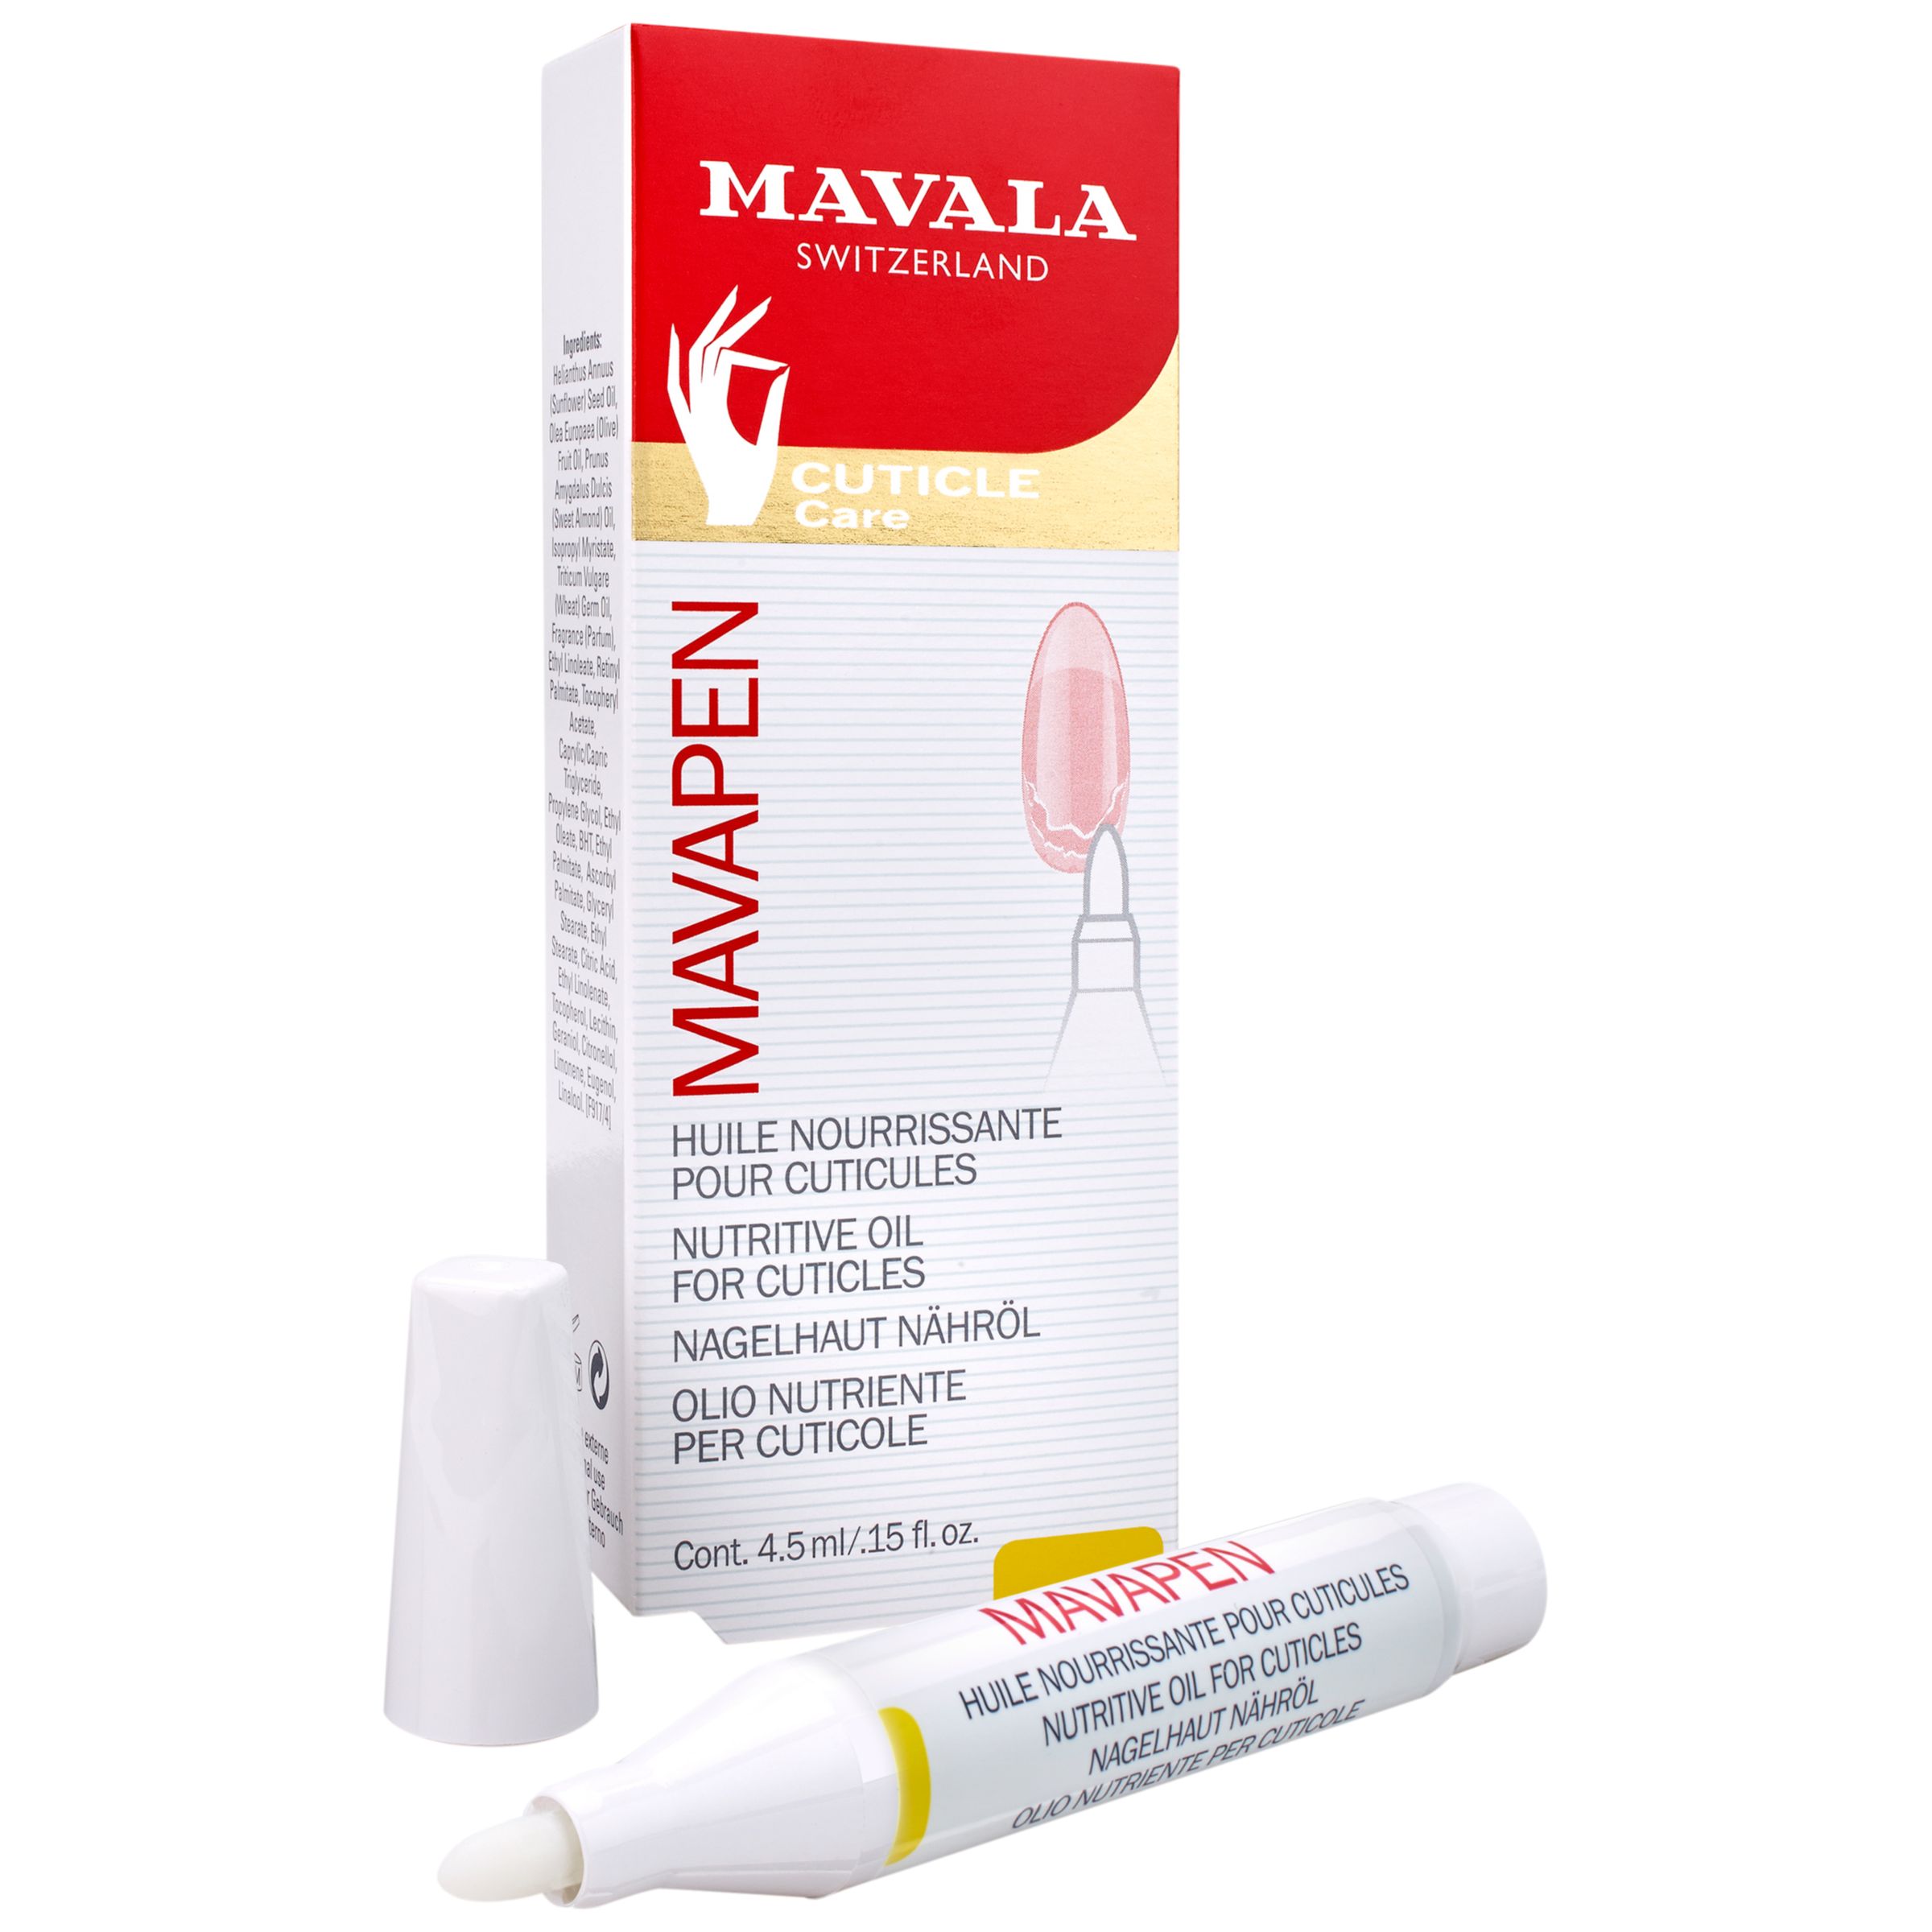 Mavala Mavapen Nutritive Oil for Cuticles, 4.5ml